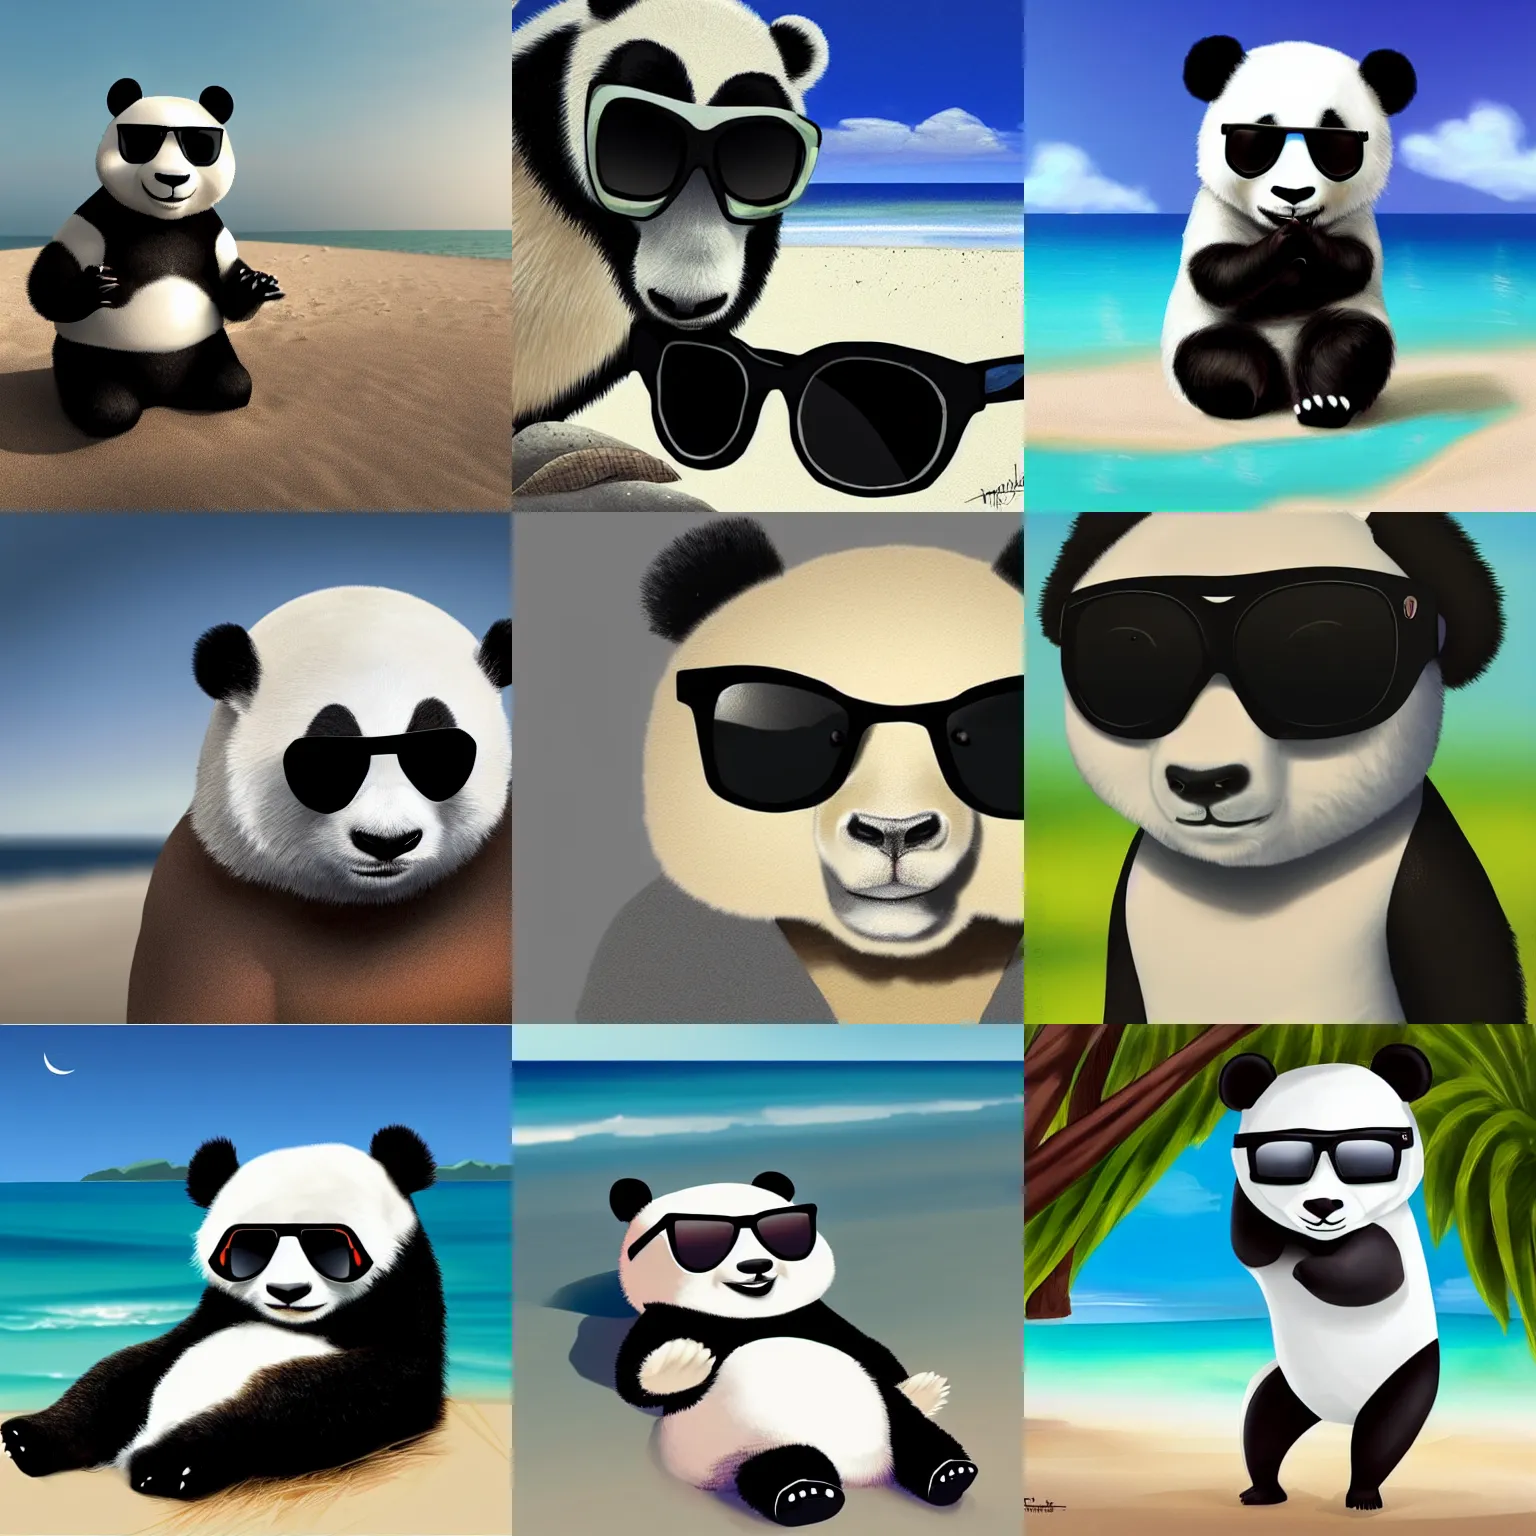 Prompt: a panda wearing sunglasses on the beach, trending on artstation, digital art